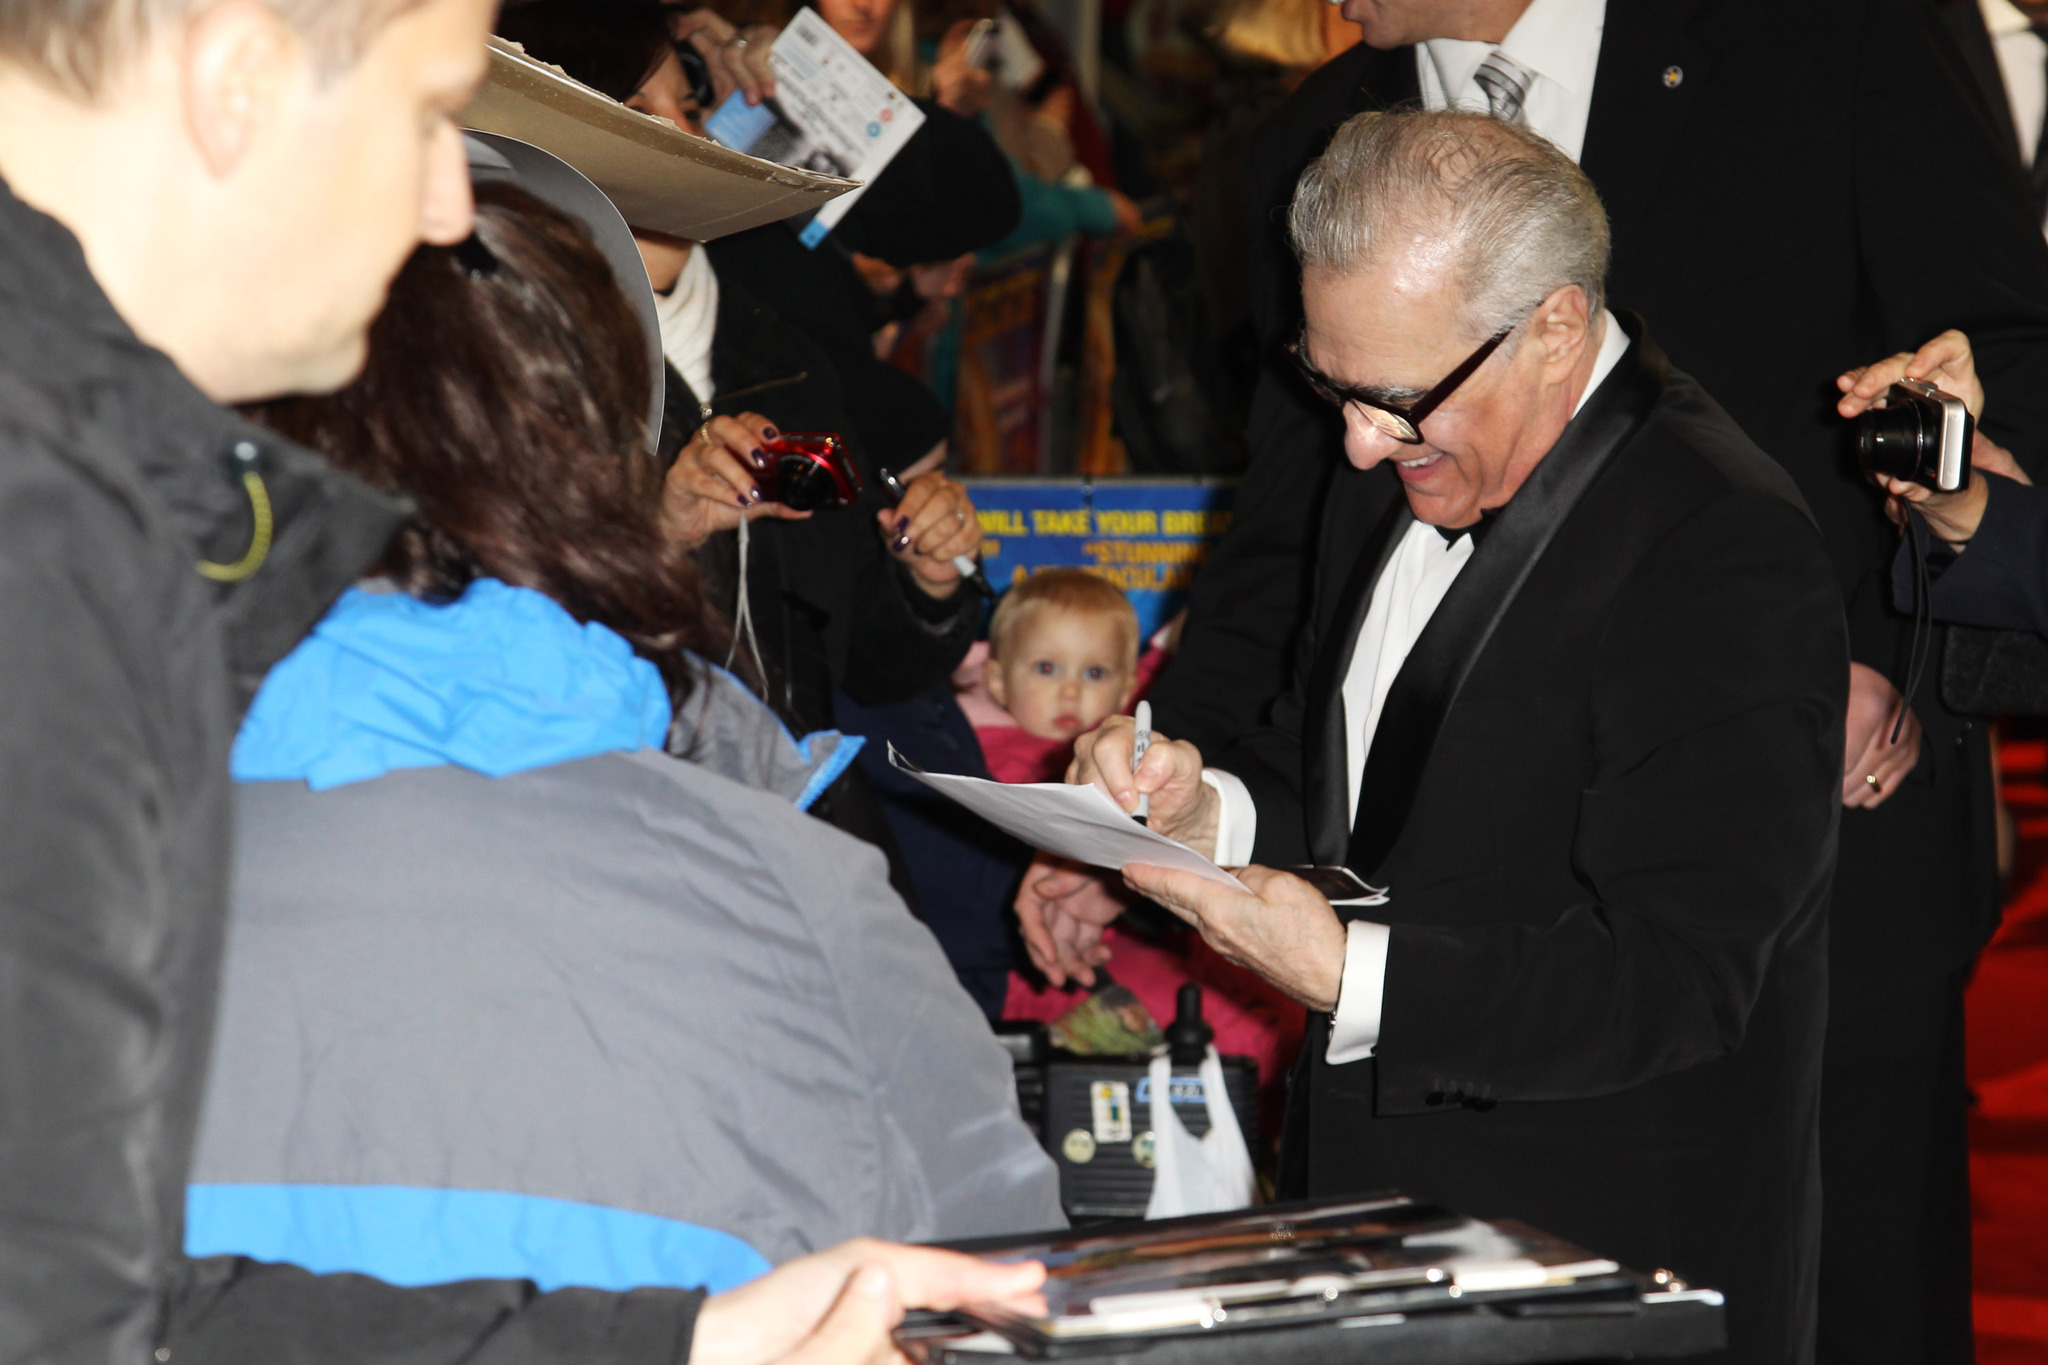 Martin Scorsese at event of Hugo isradimas (2011)